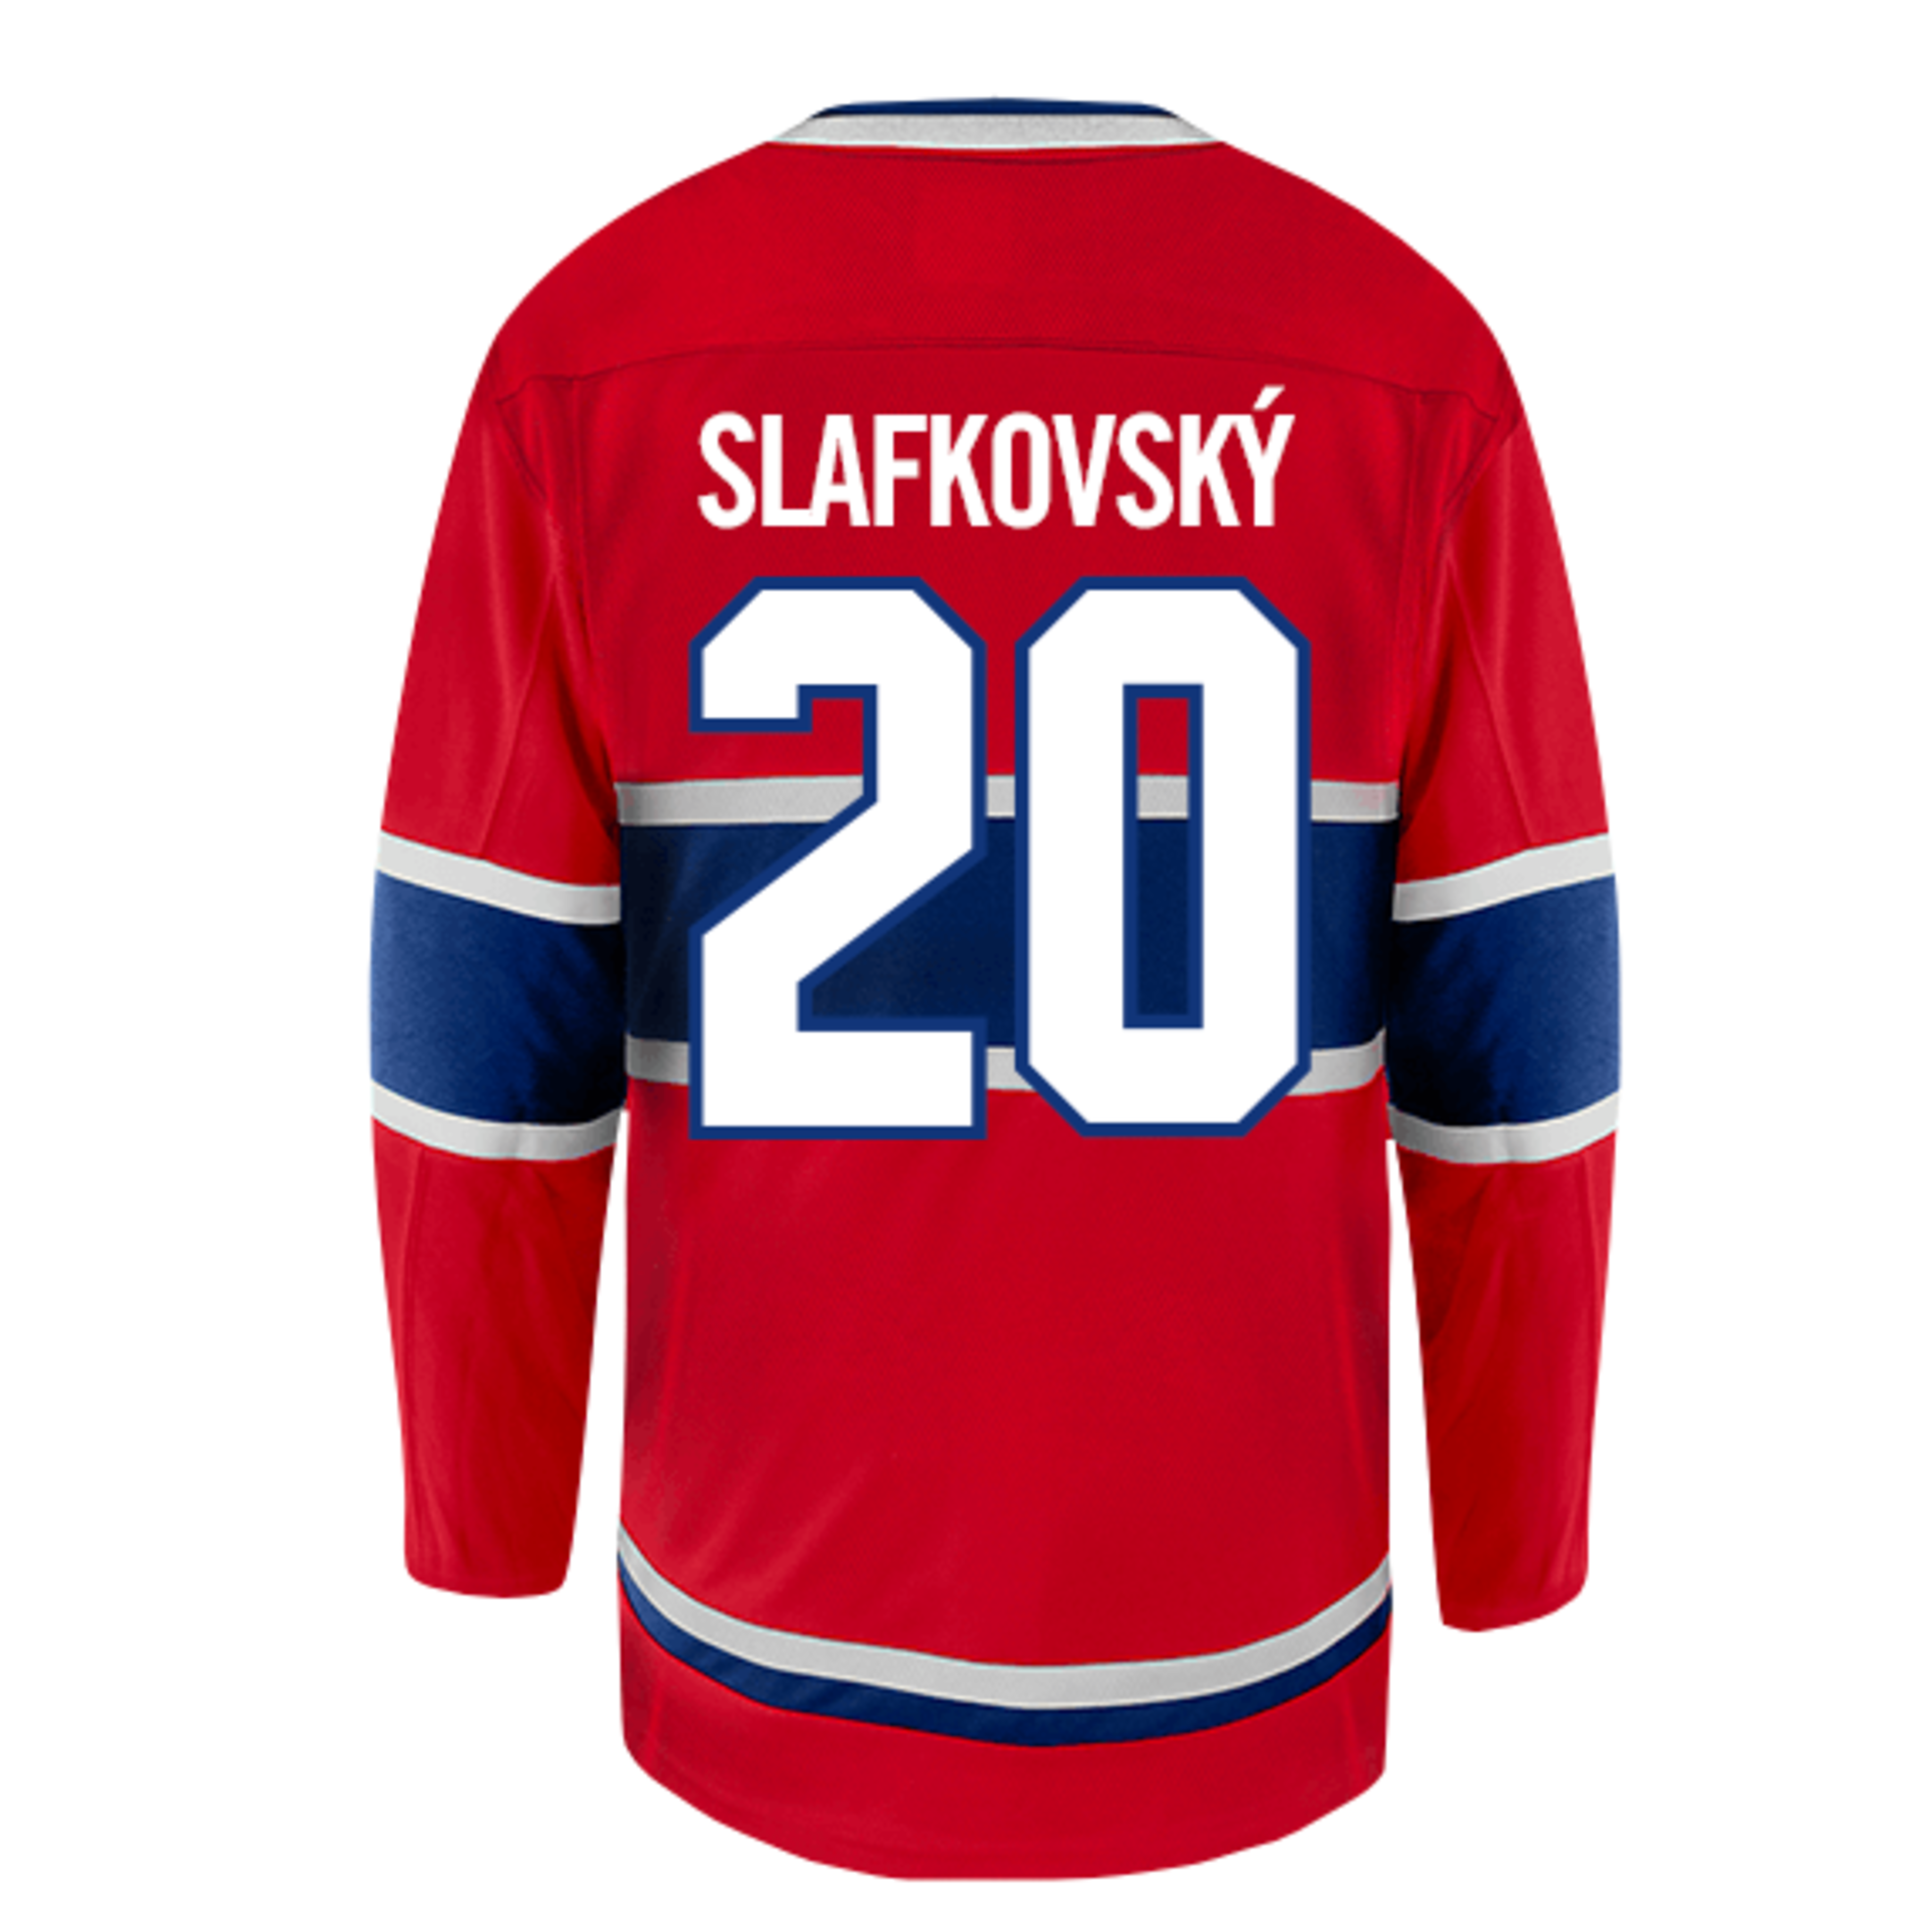 Lids Juraj Slafkovsky Montreal Canadiens Fanatics Authentic